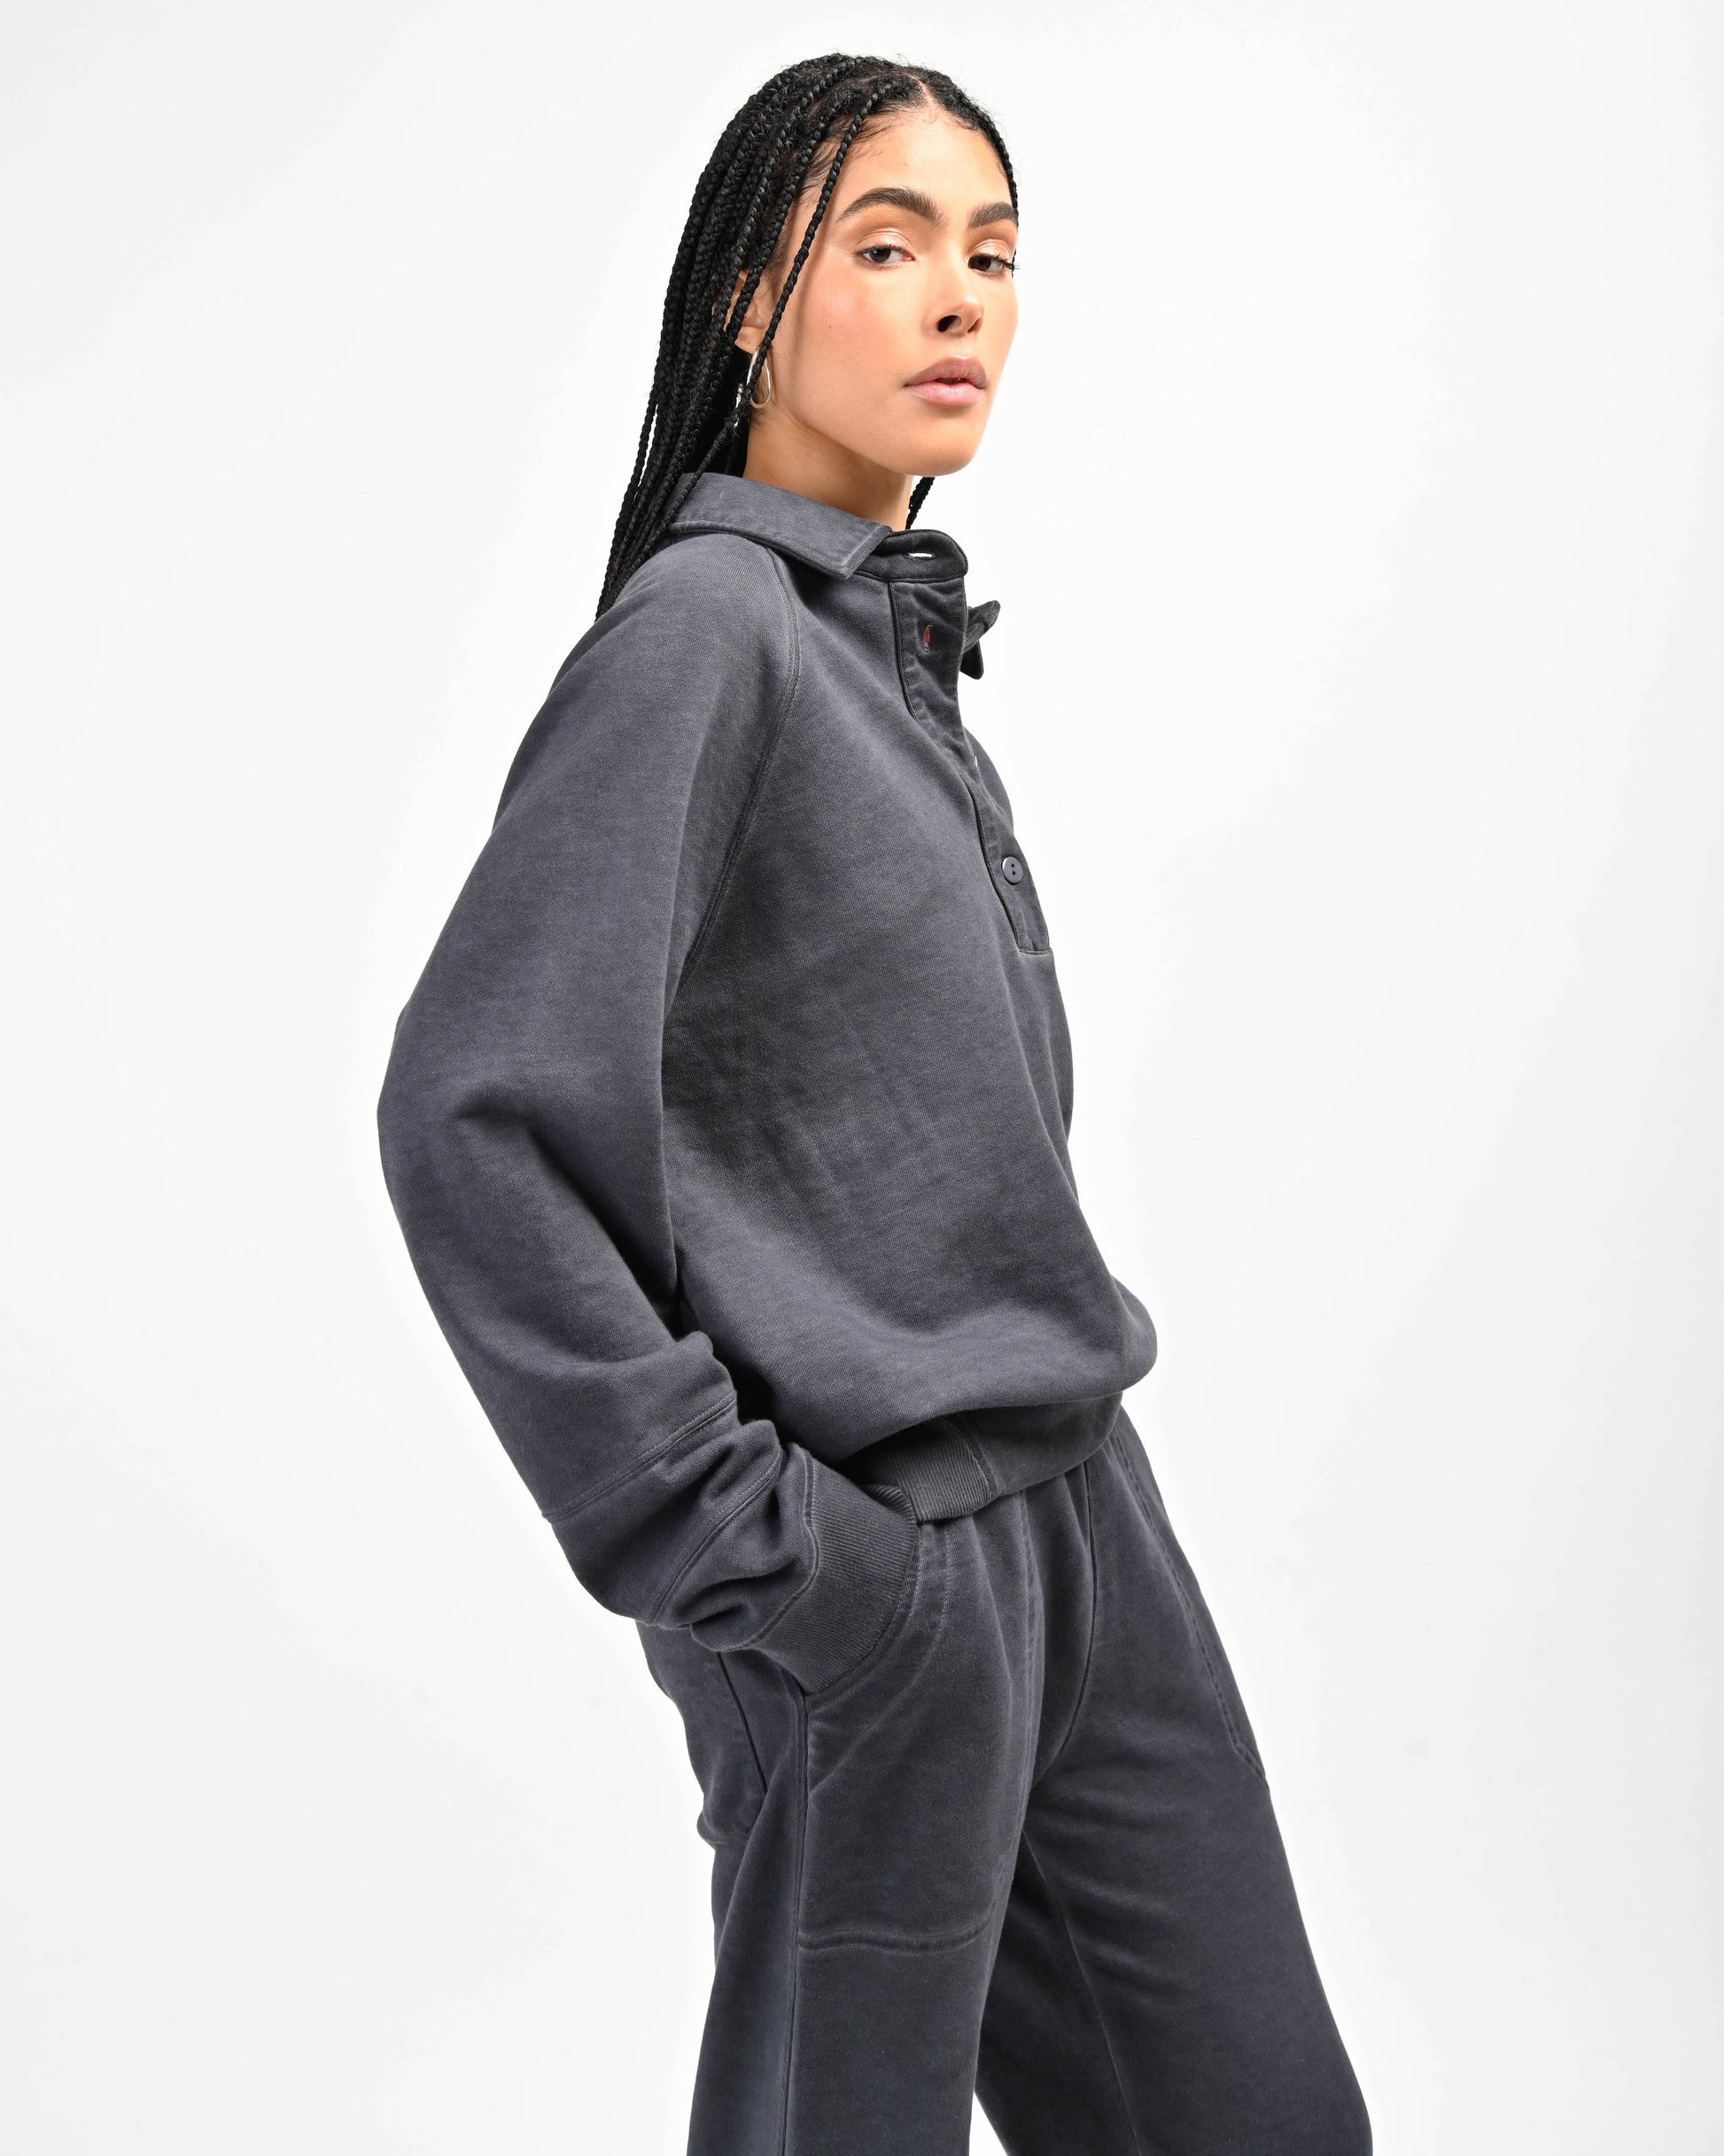 Side View of Model in August Pullover Sweatshirt by Aseye Studio